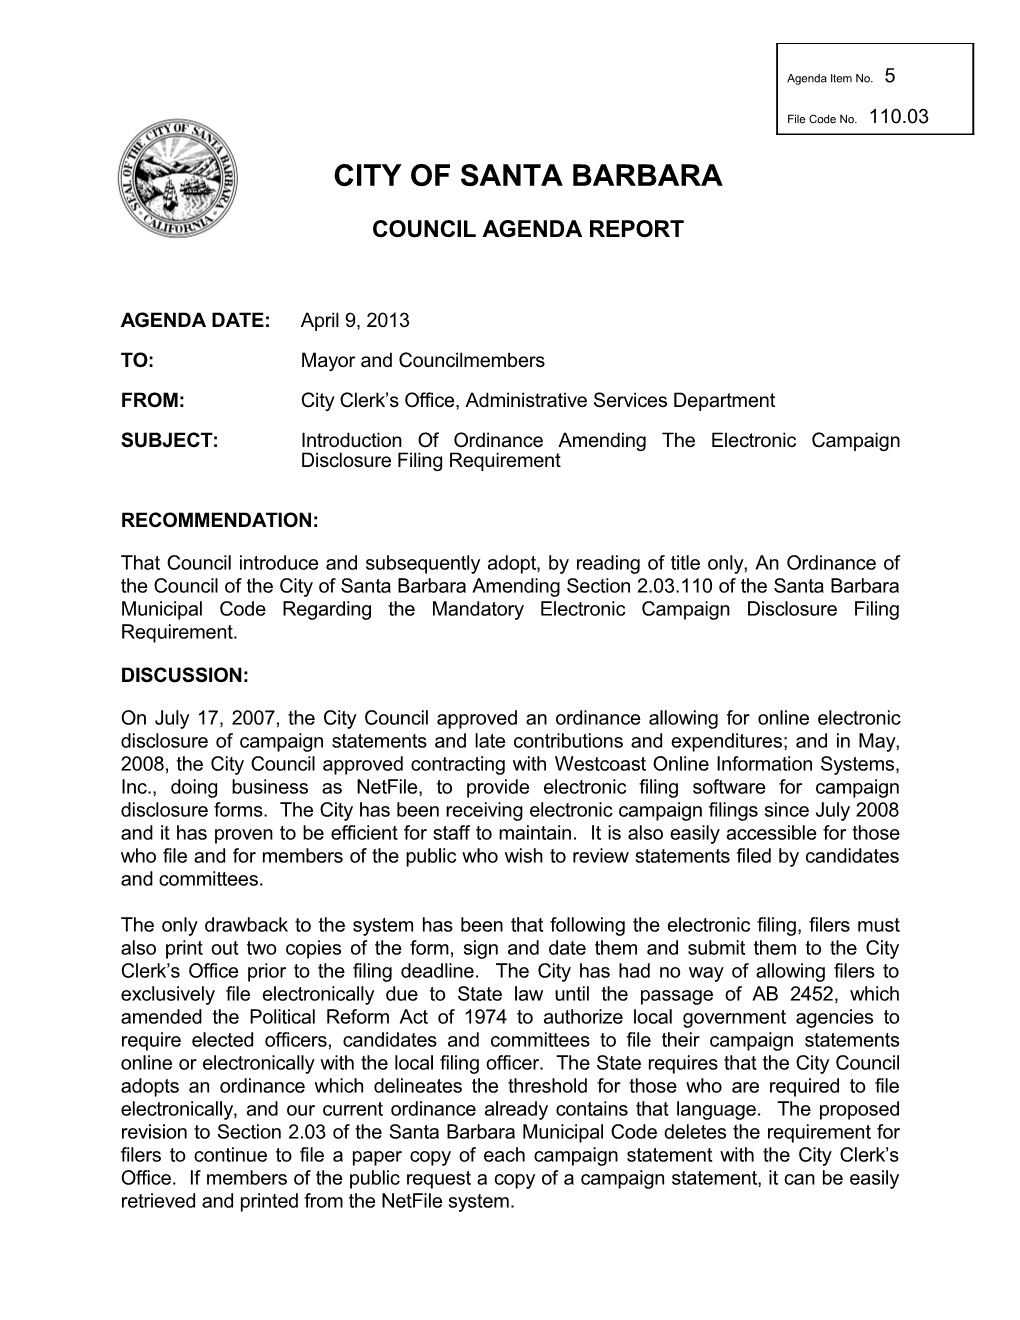 City of Santa Barbara s48